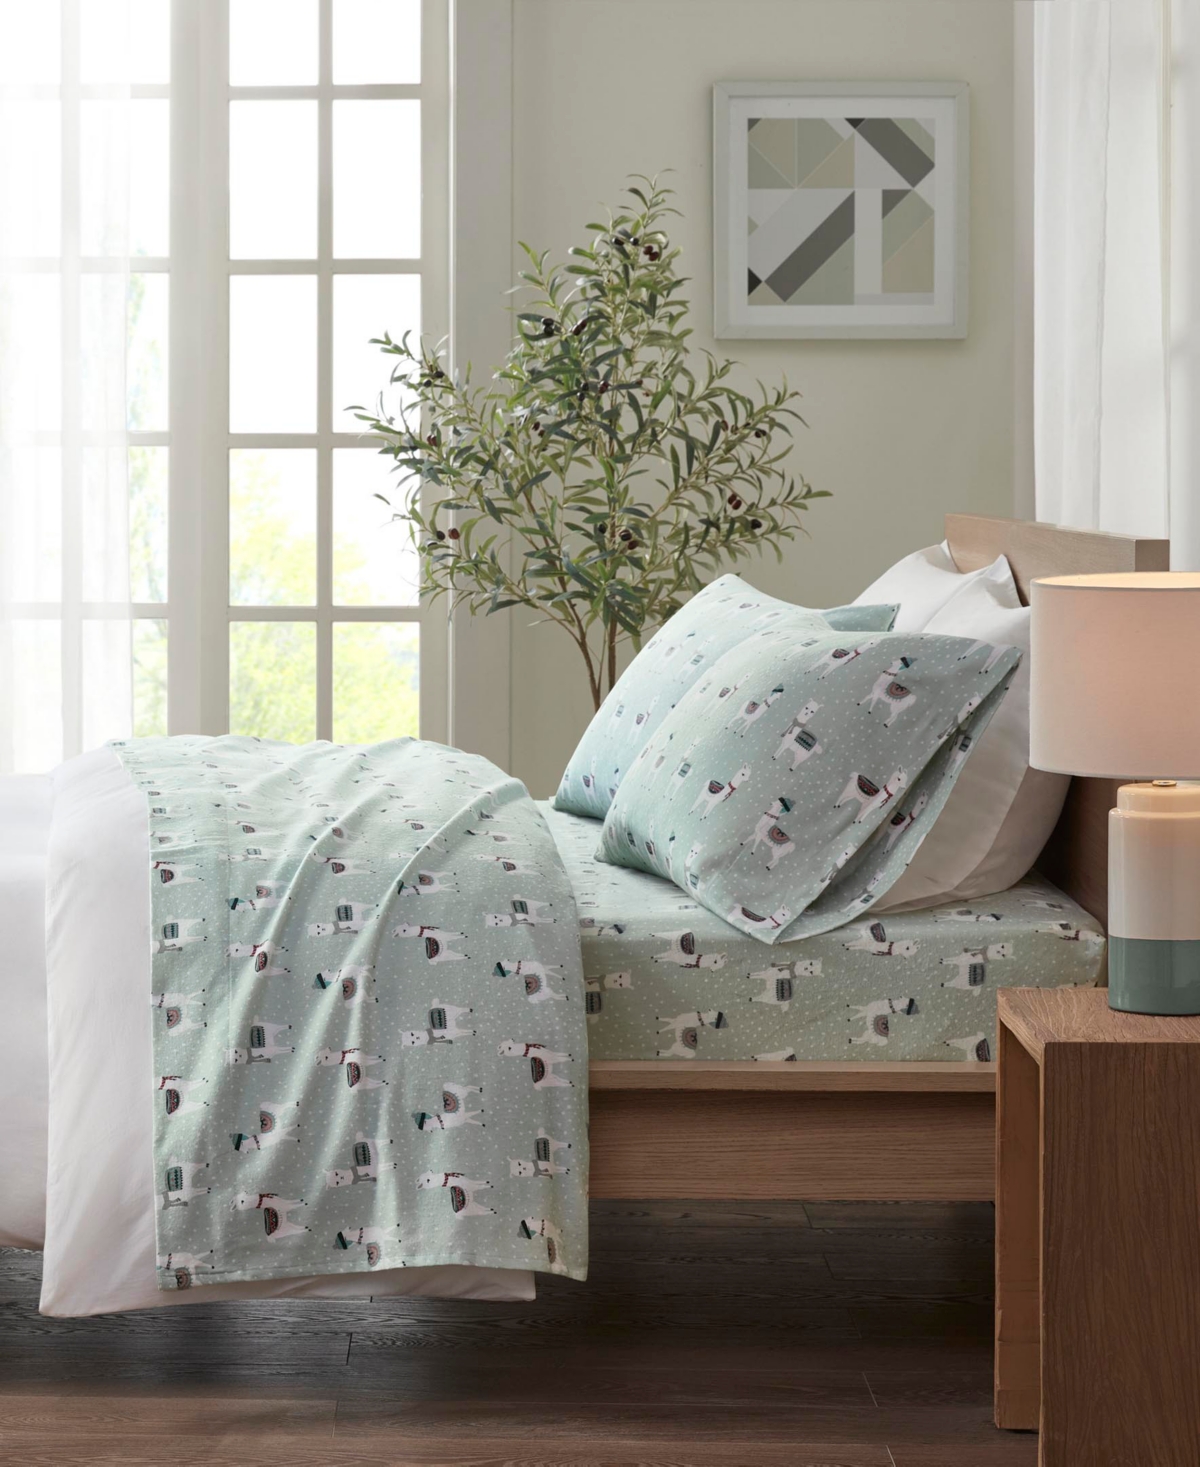 Sleep Philosophy True North By  Novelty Printed Cotton Flannel 3-pc. Sheet Set, Twin Bedding In Seafoam Llama